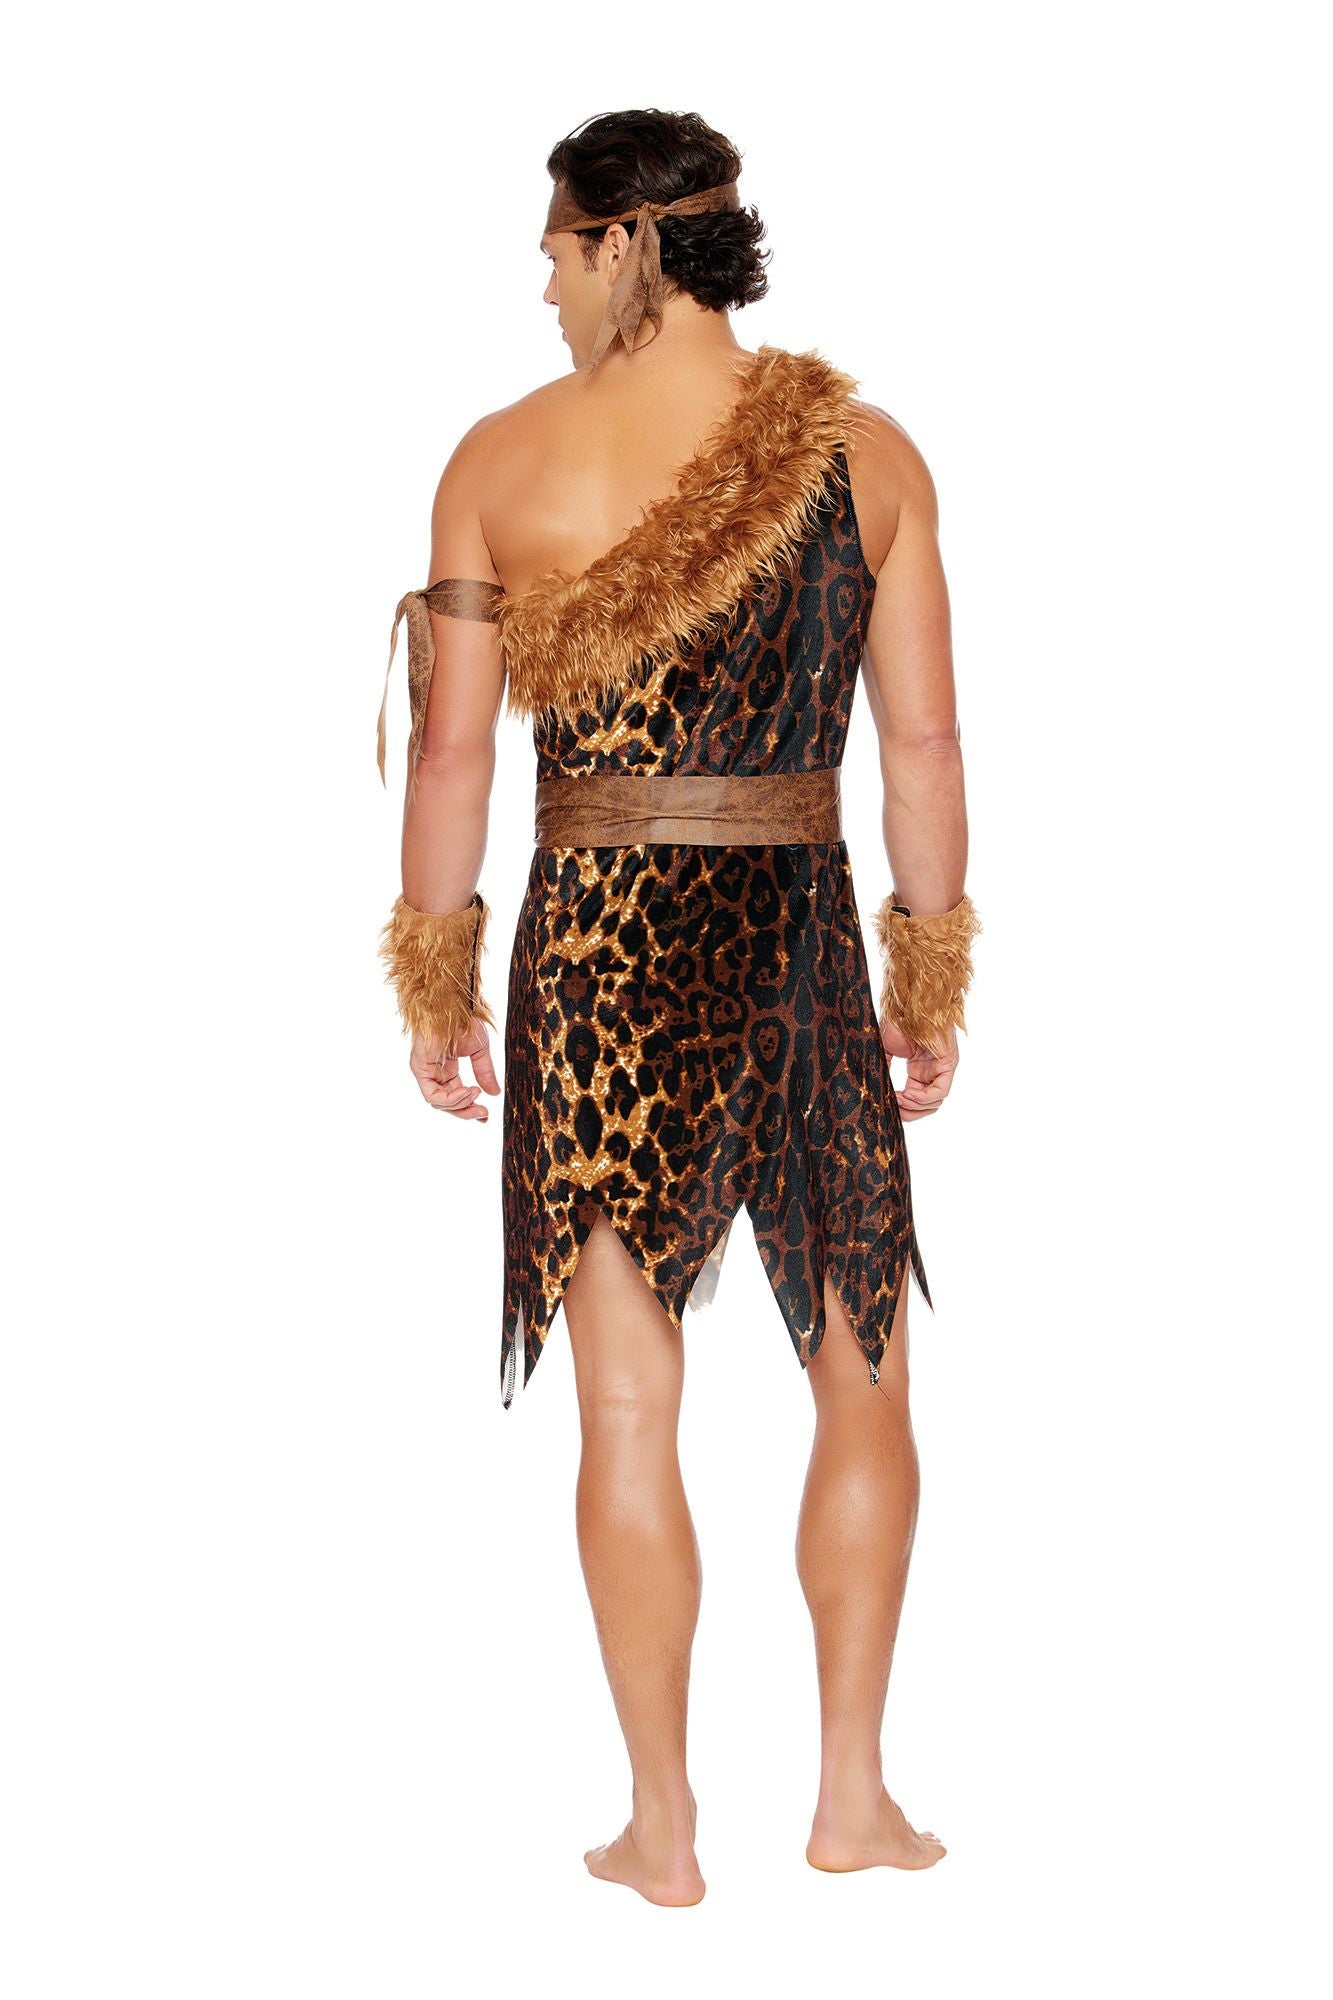 Caveman Costume Adult